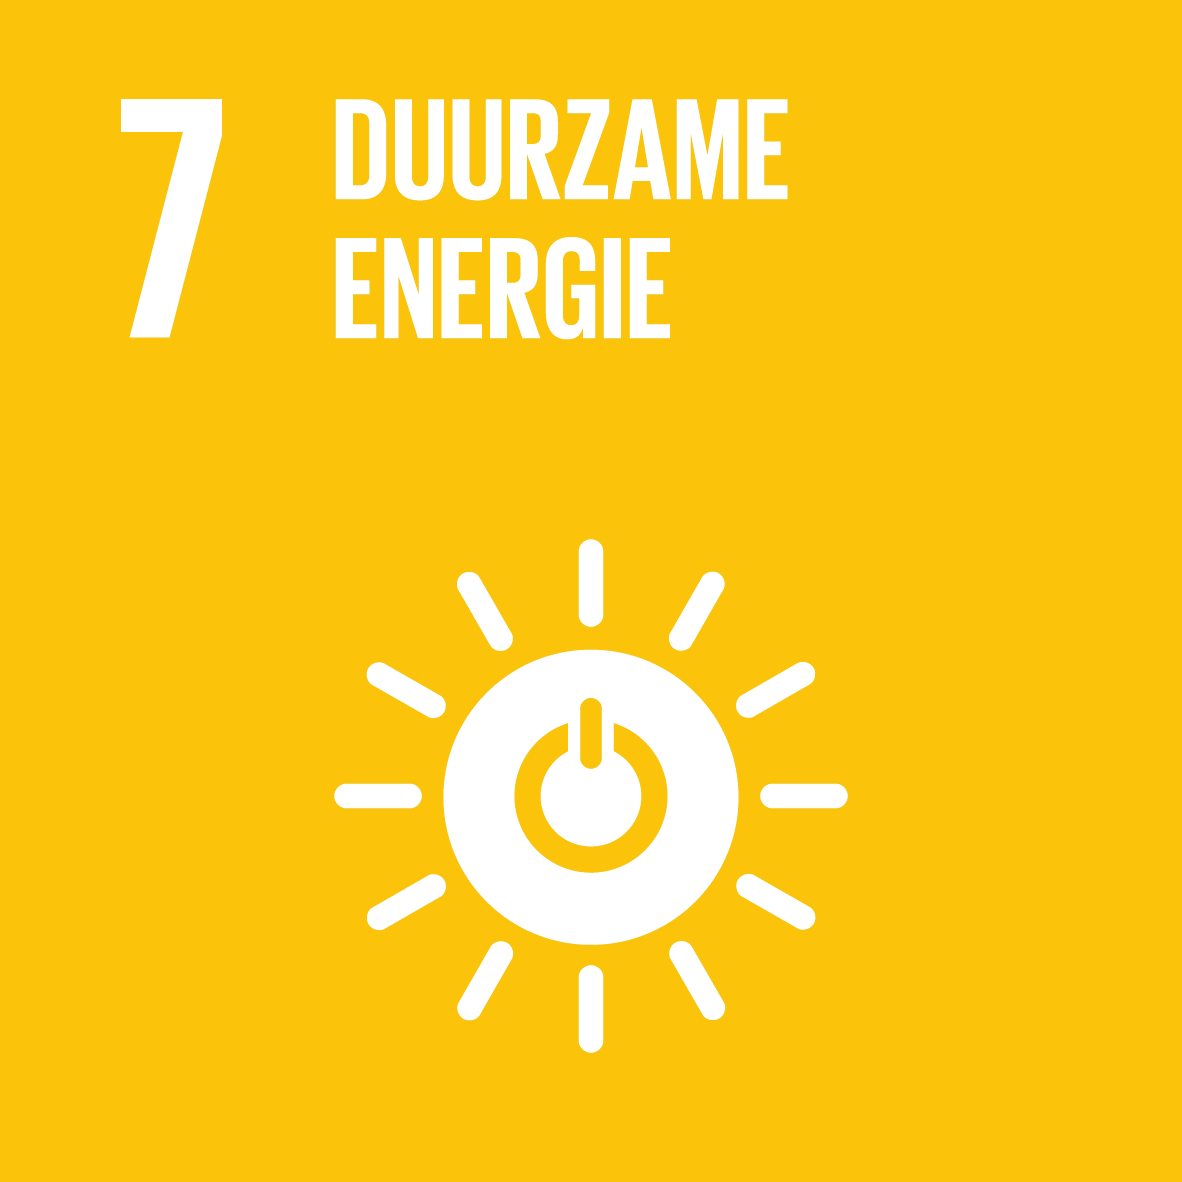 07. Duurzame energie